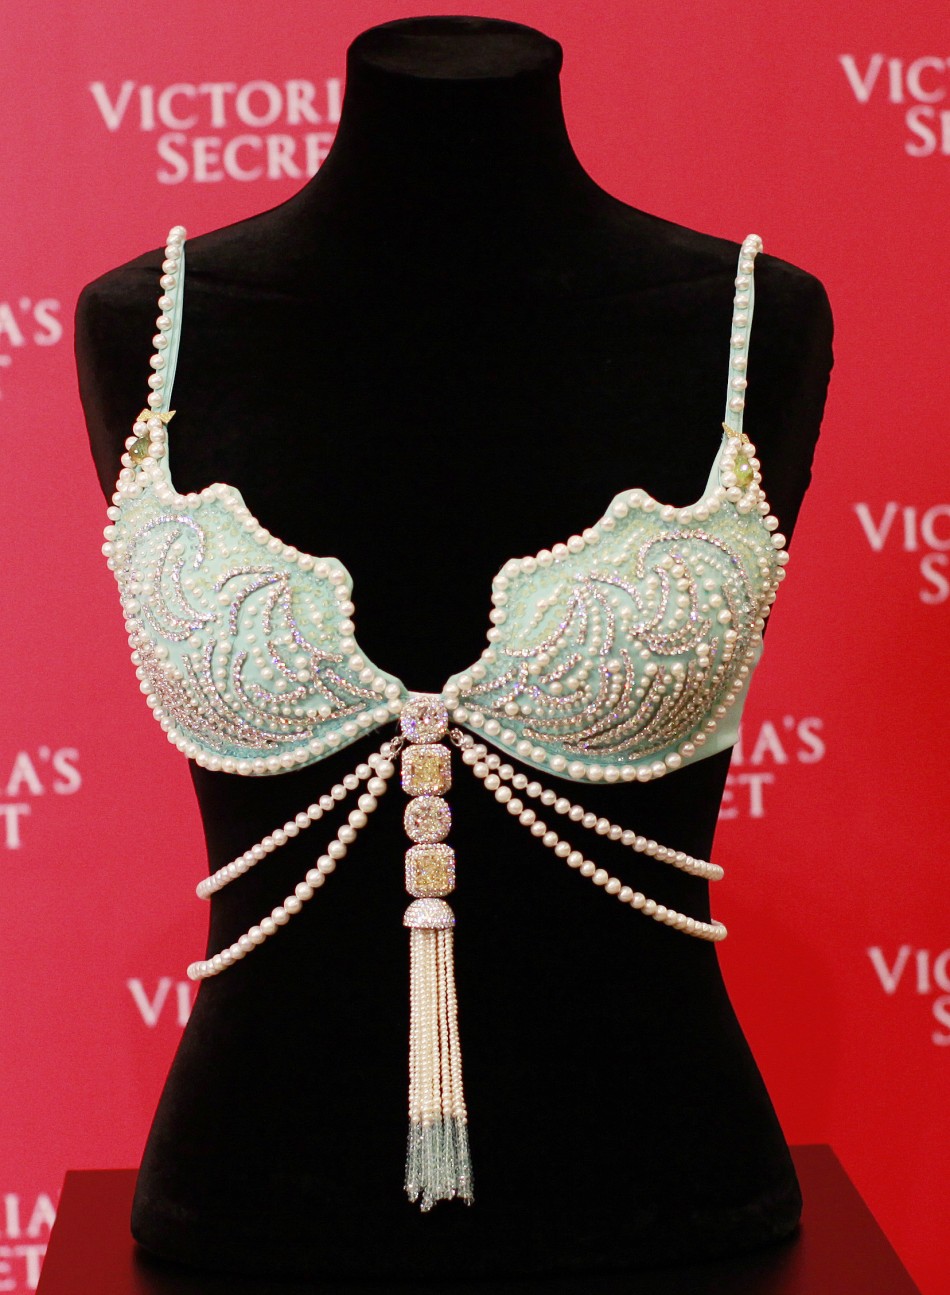 Victorias Secret 2011 Fantasy Treasure Bra is seen in New York